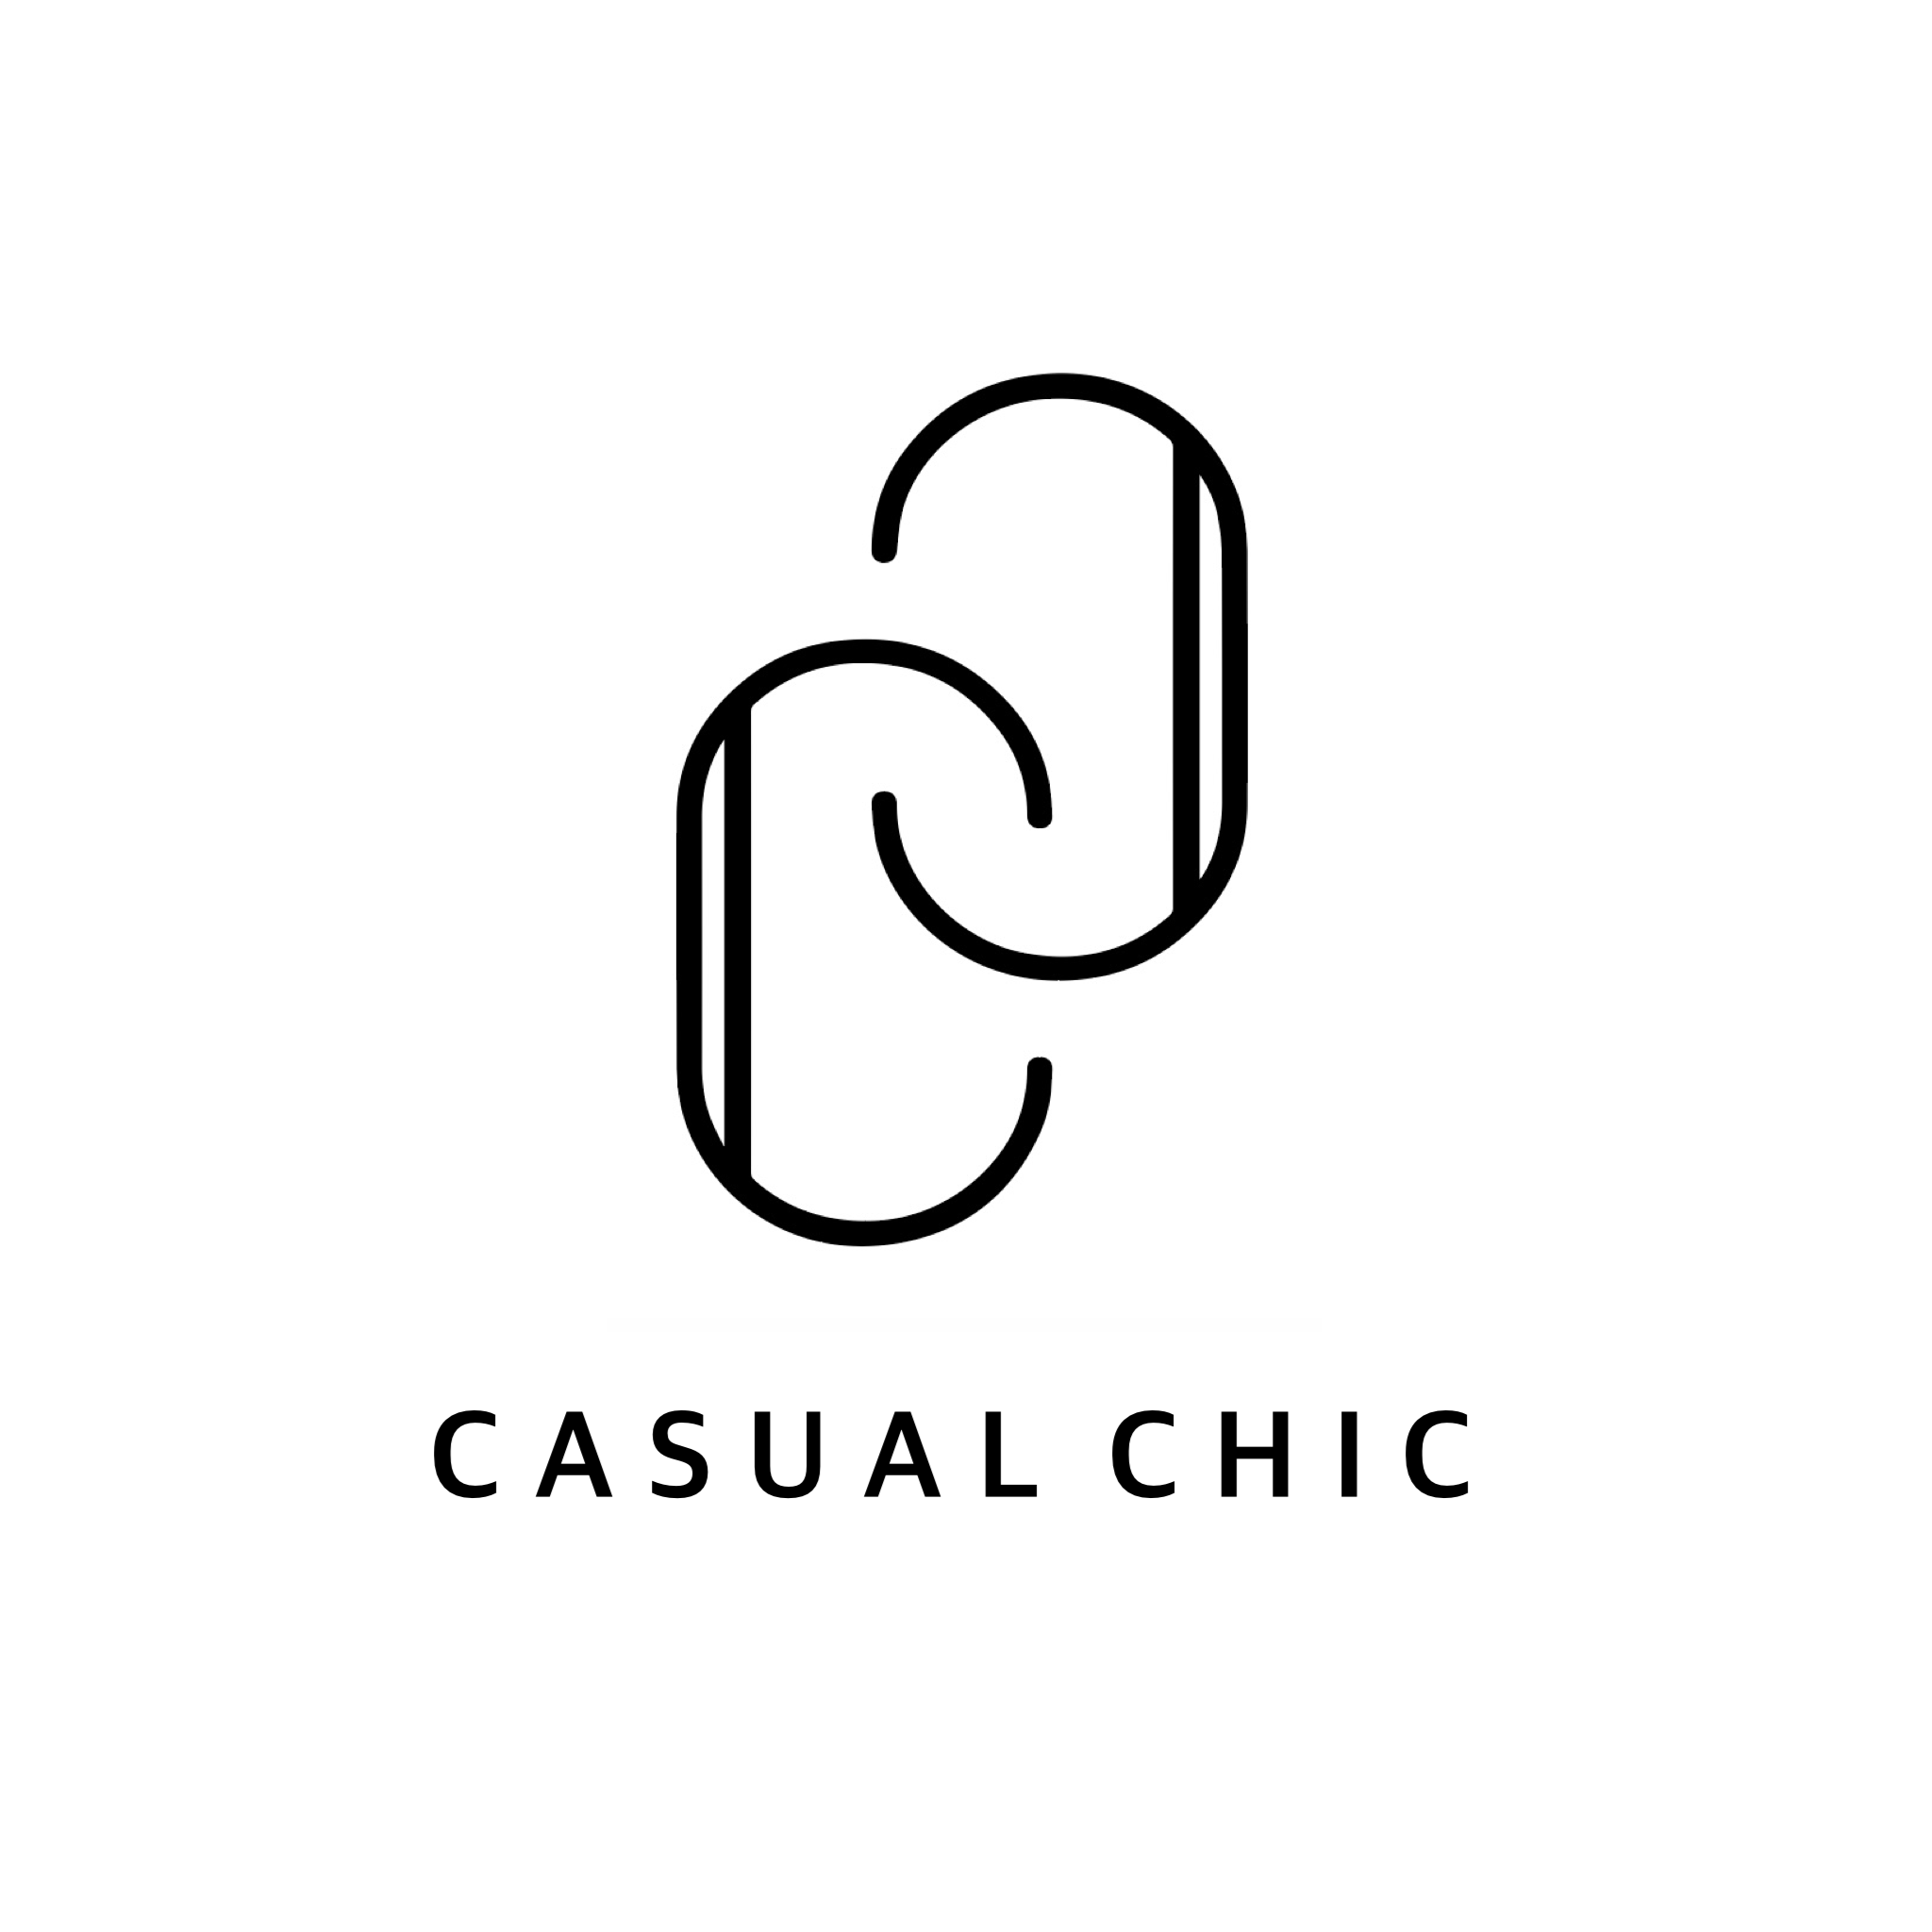 Casual Chic Design